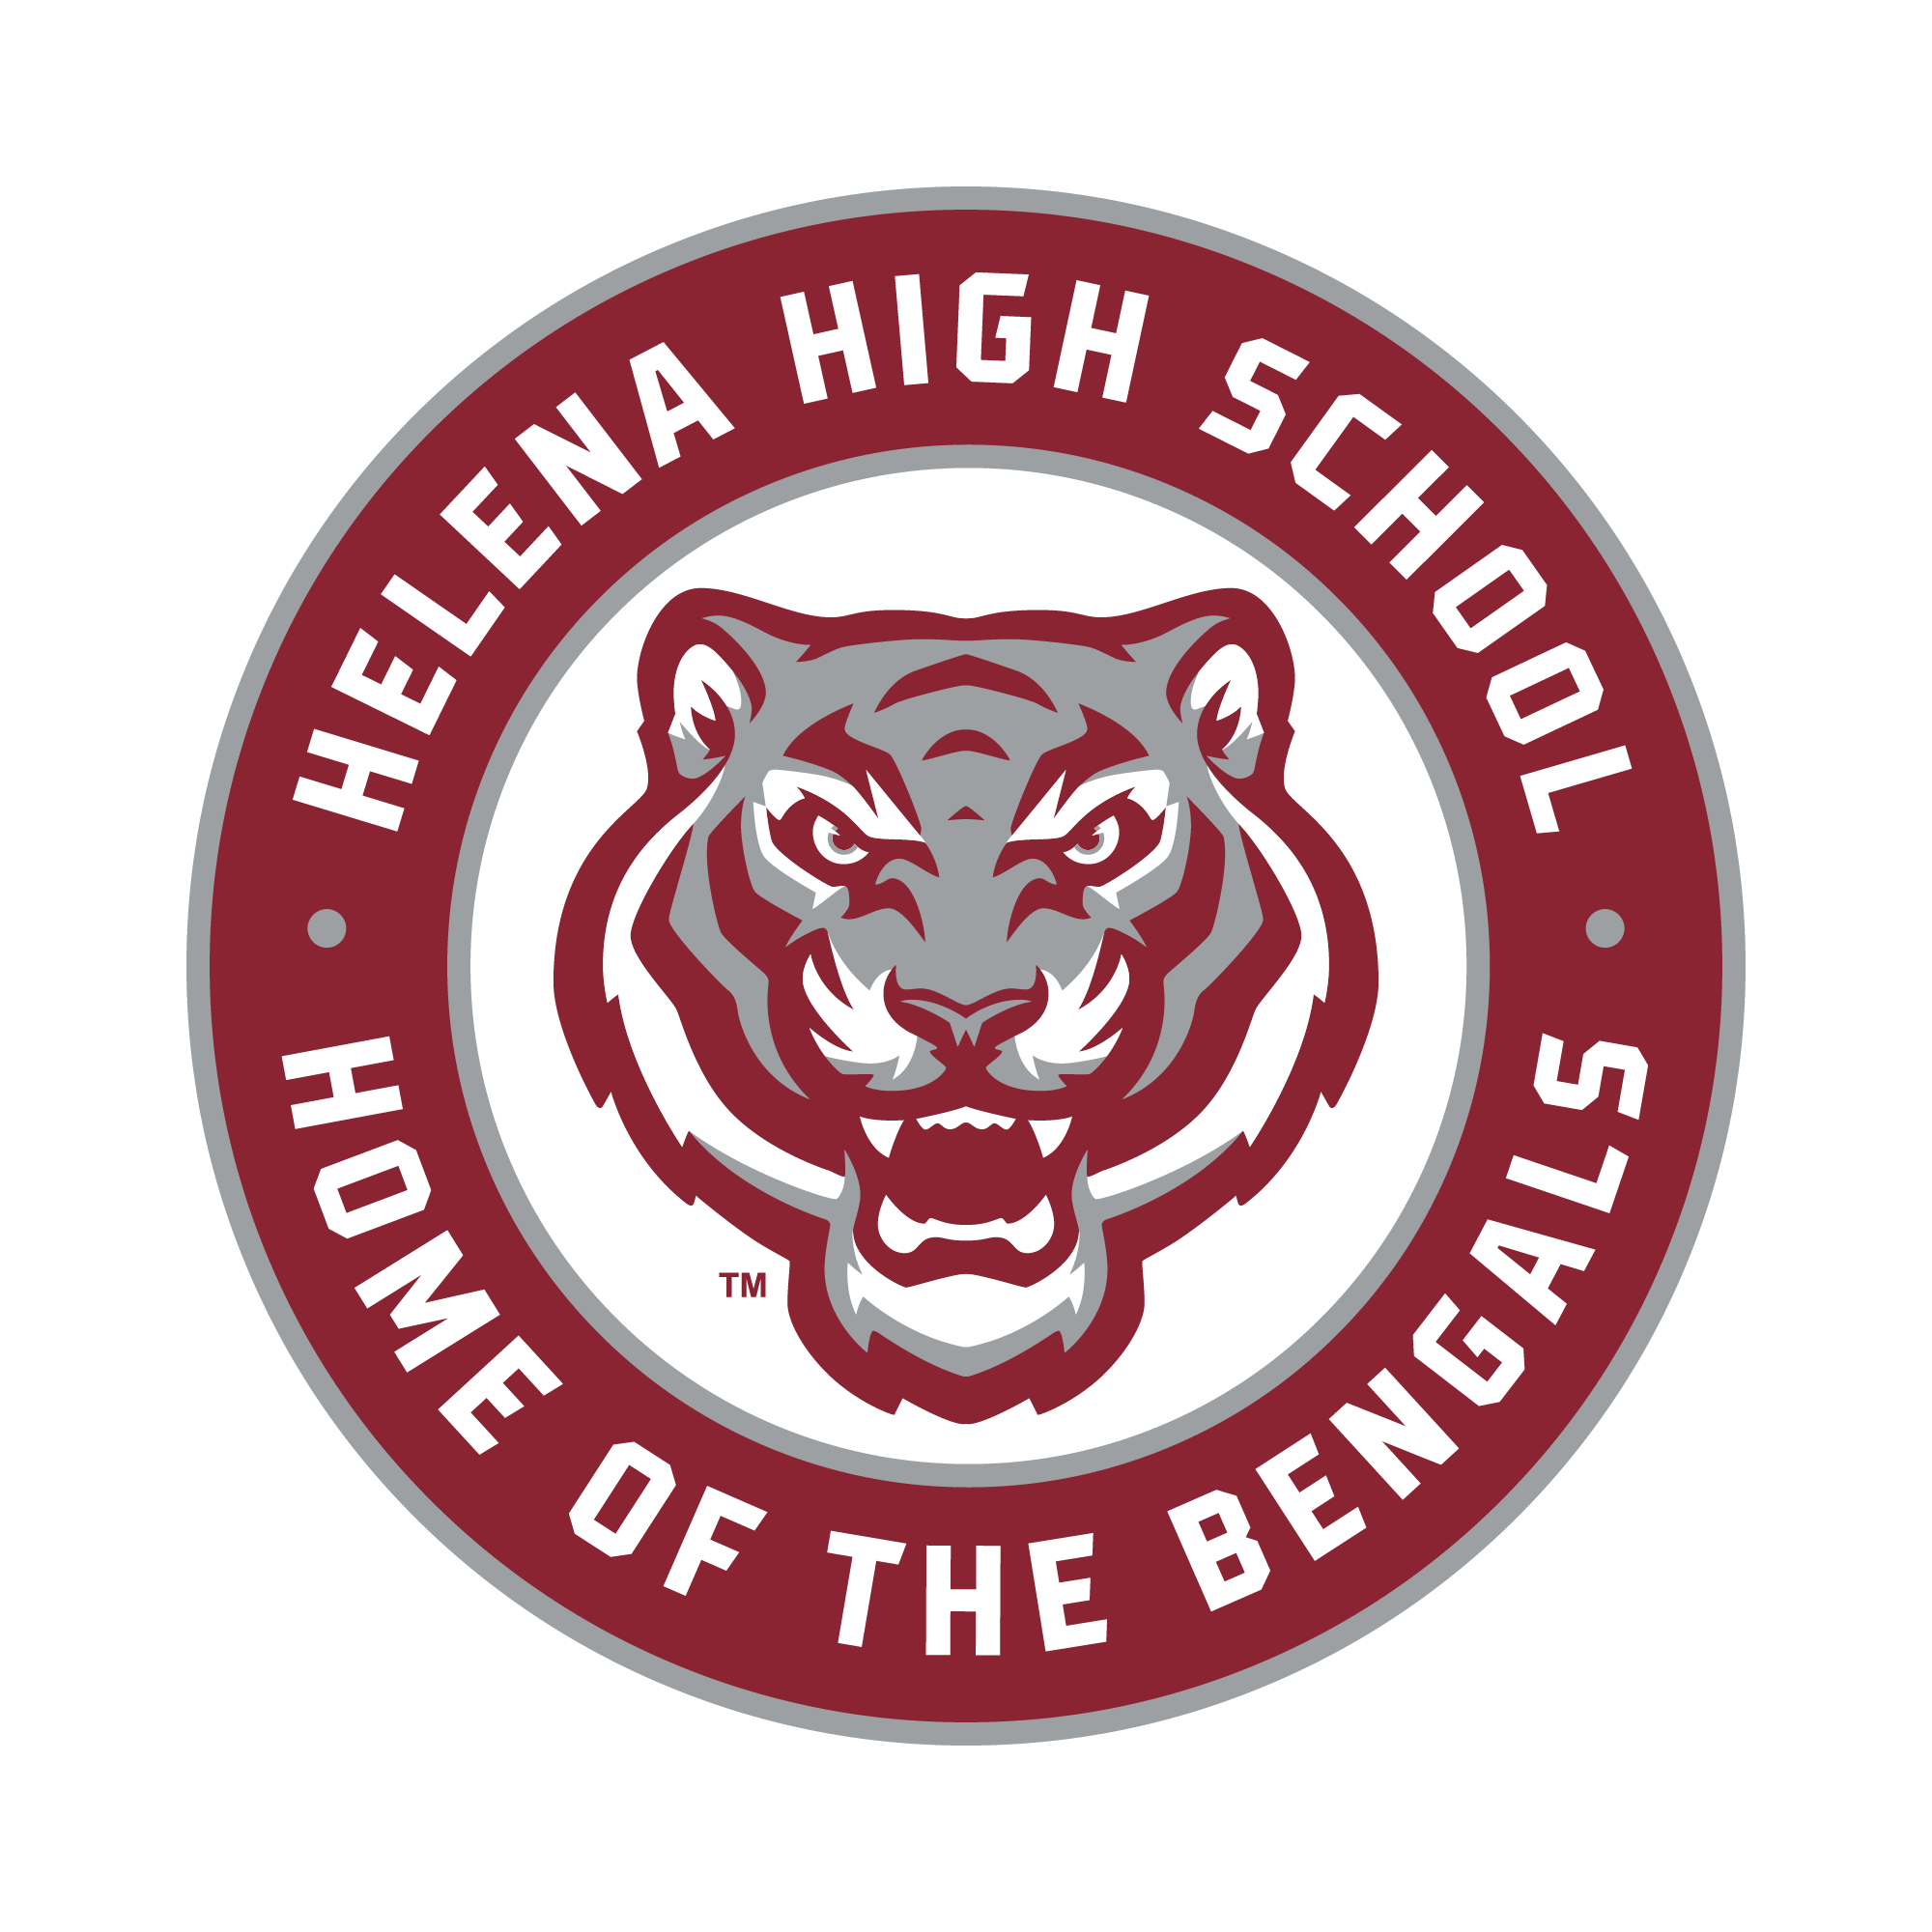 Helena High School